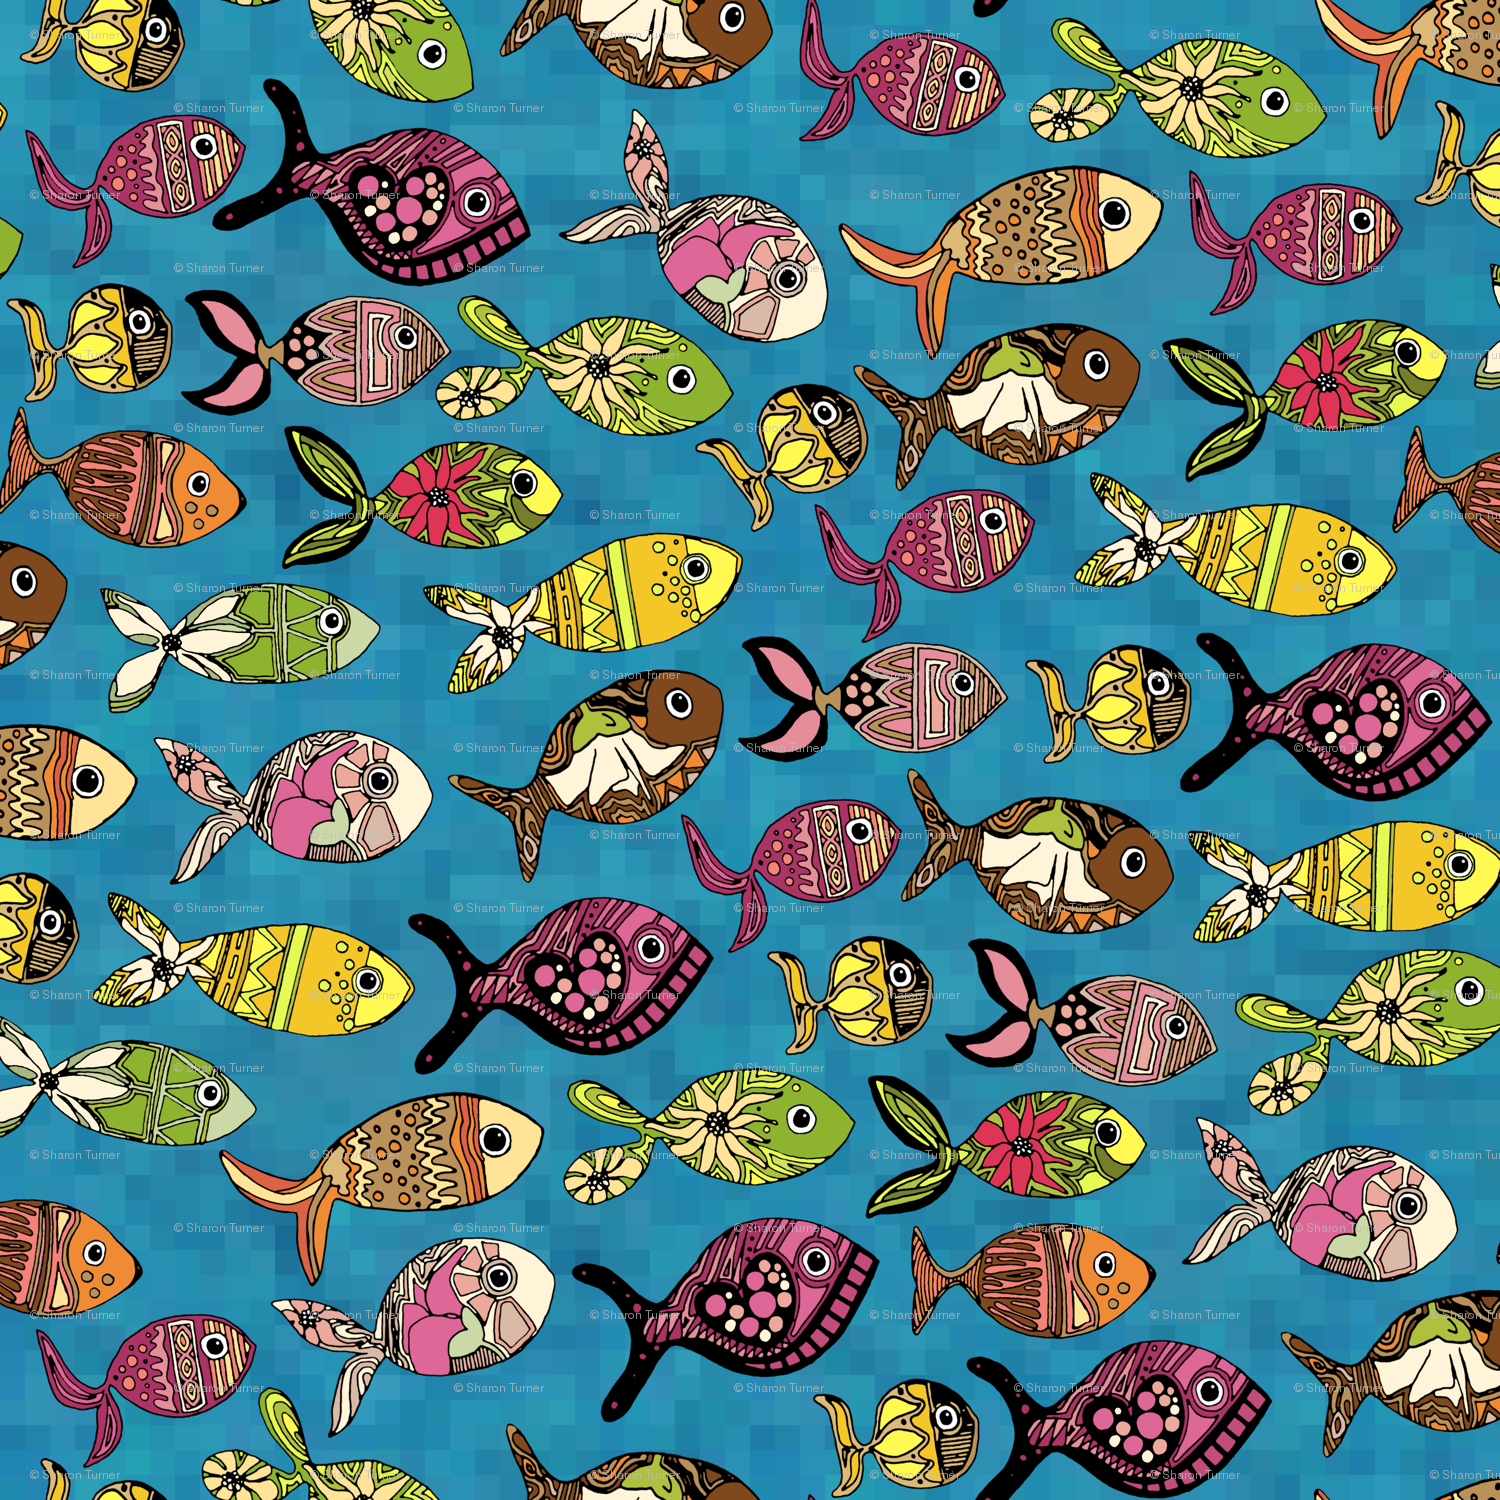 fish design wallpaper,pattern,textile,design,wrapping paper,organism